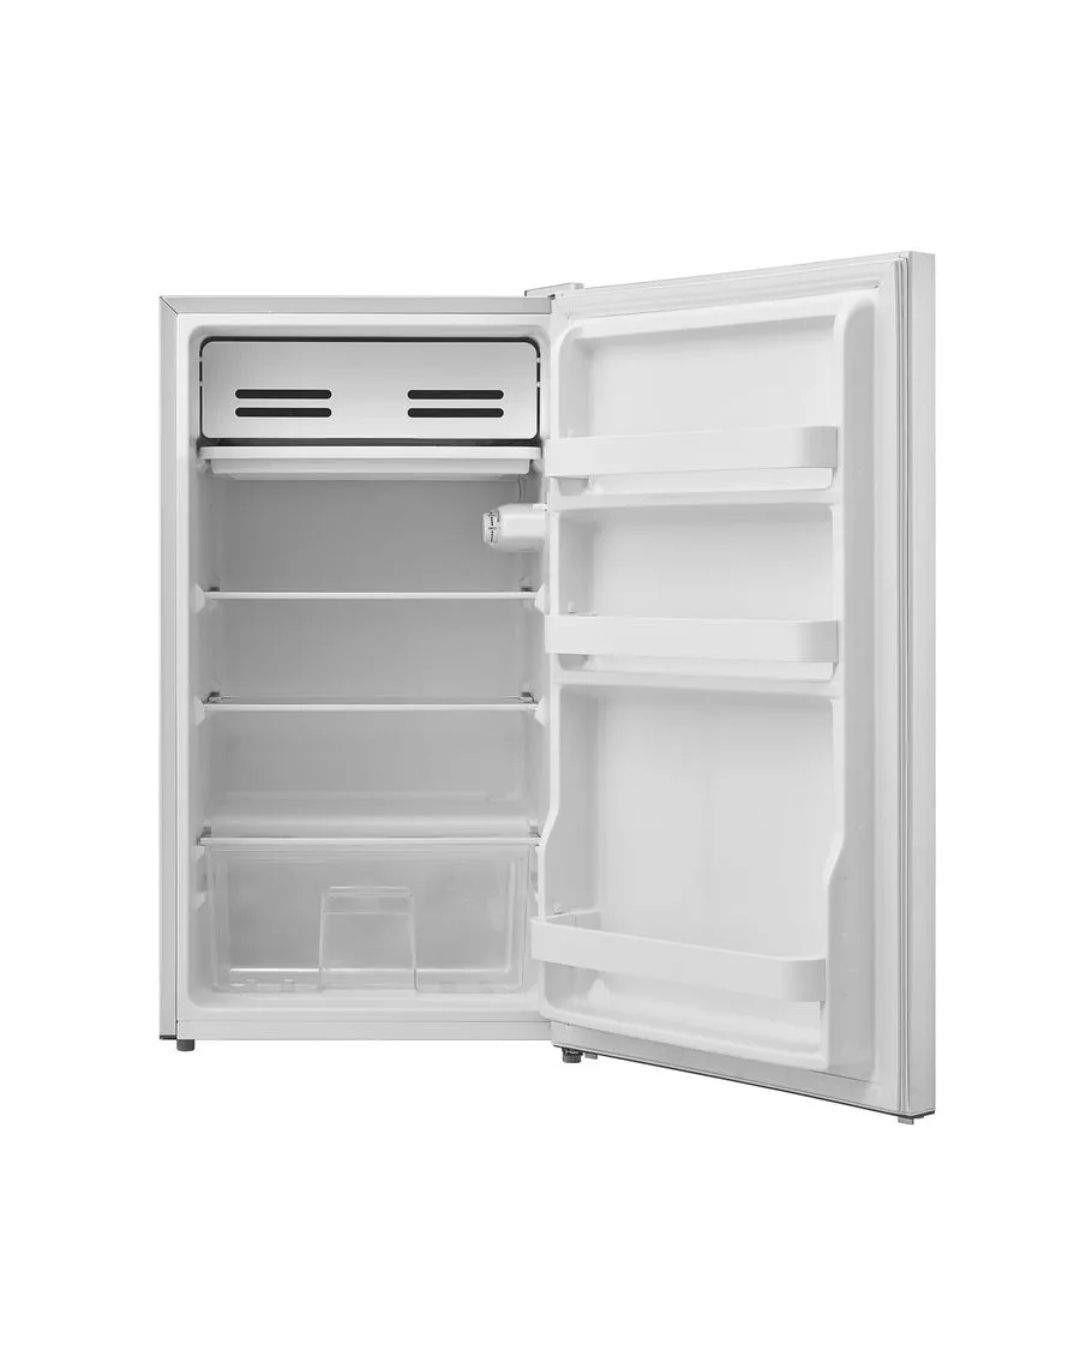 Мини-холодильник Б-95 БИРЮСА